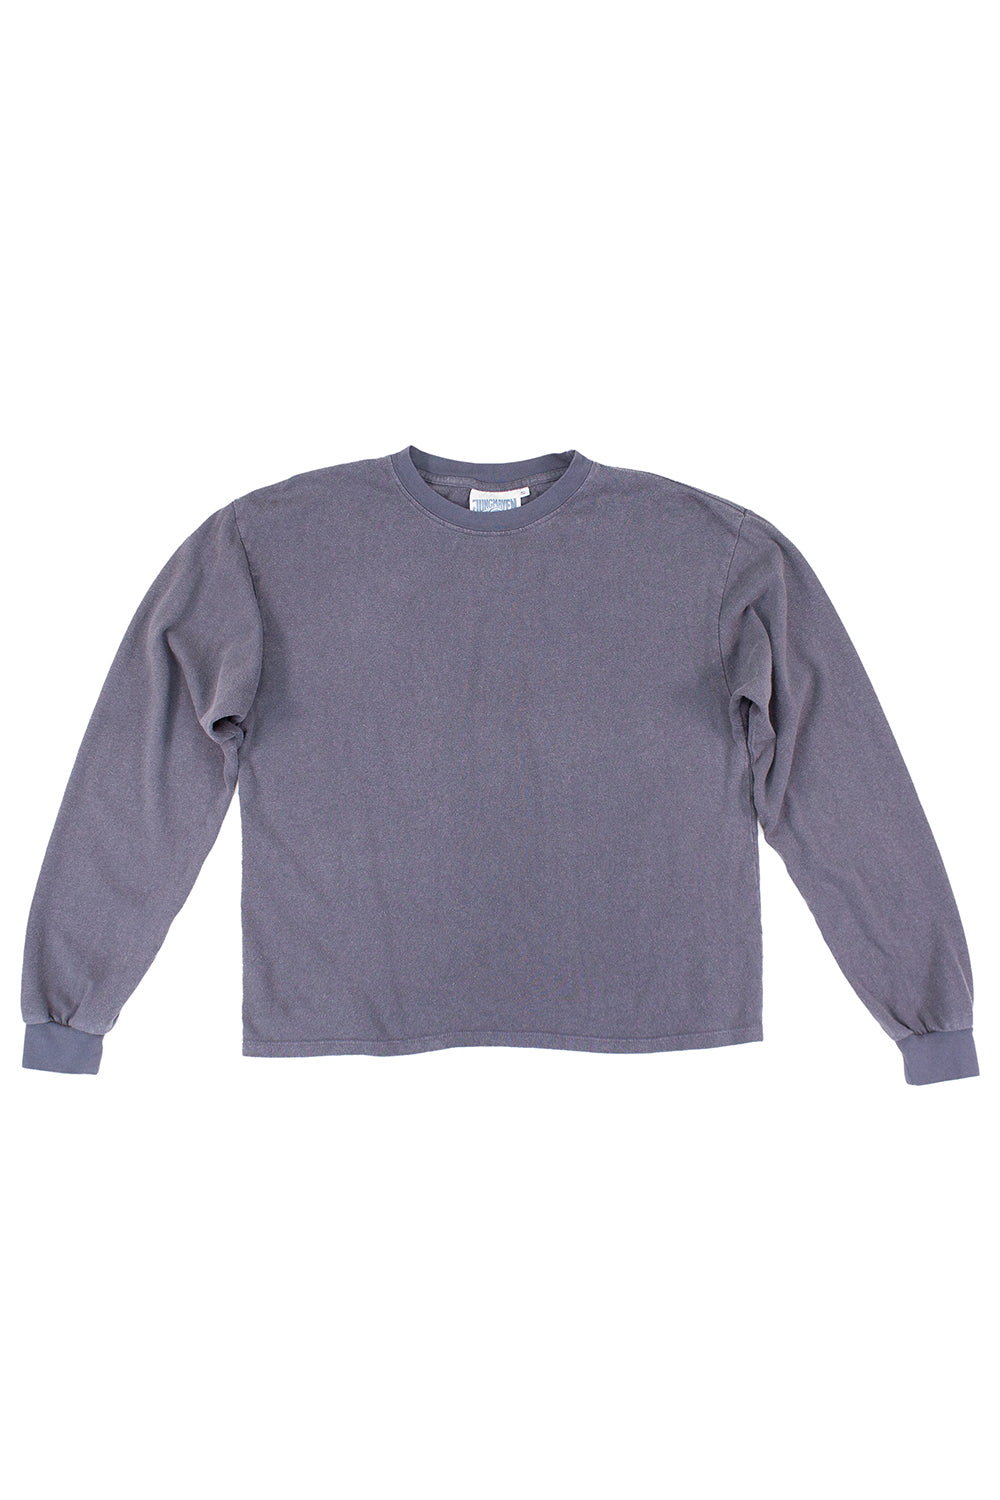 Cropped Long Sleeve Tee | Jungmaven Hemp Clothing & Accessories / Color: Diesel Gray